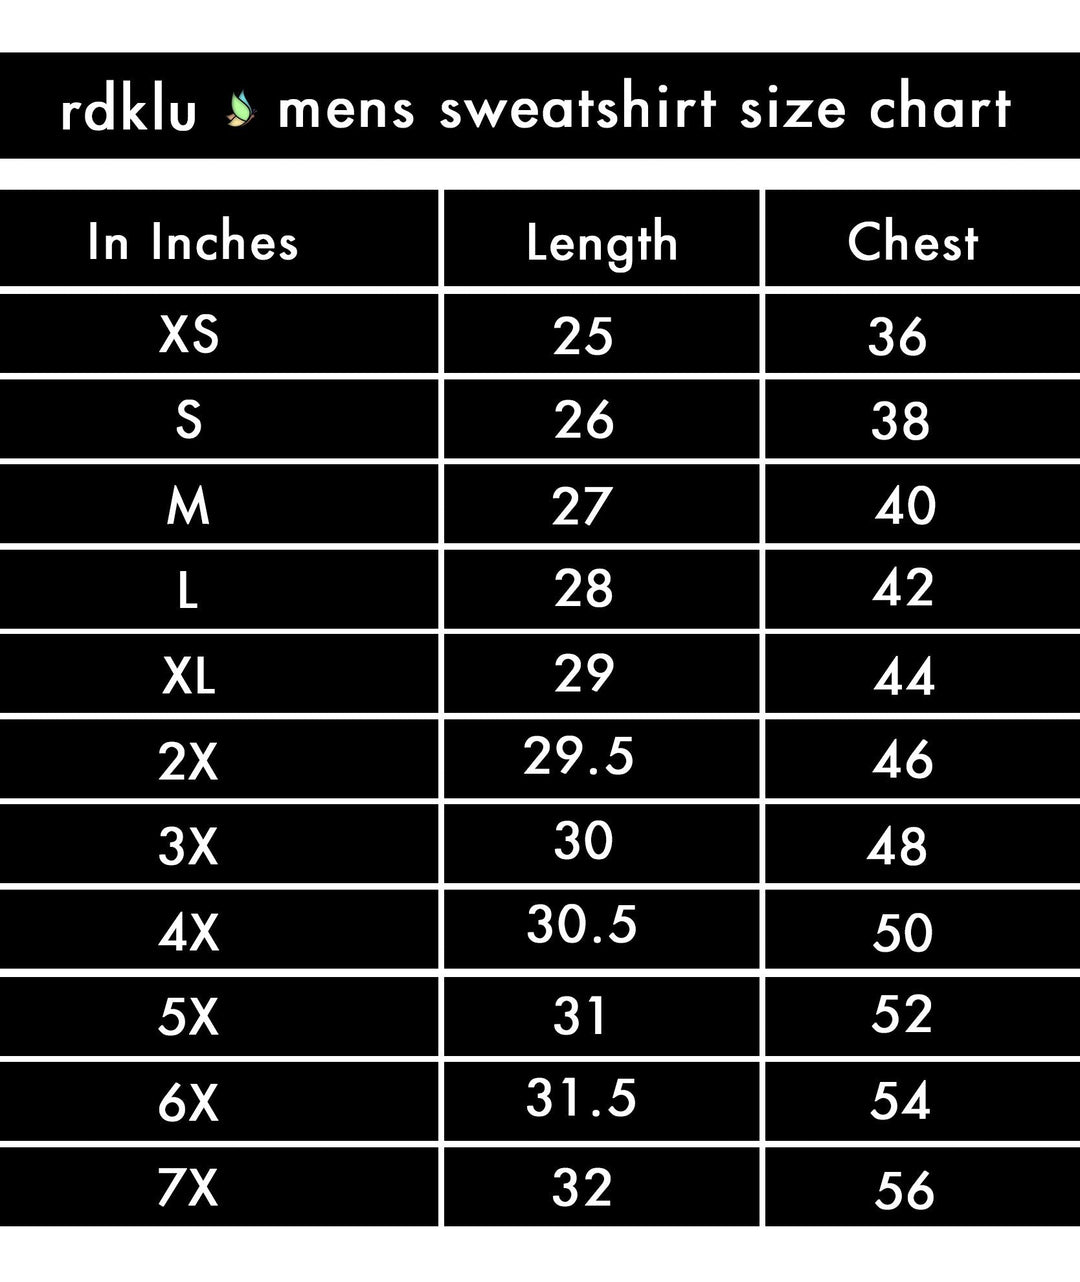 RDKLU MENS SWEATSHIRT - RDKL - Men's Sweatshirt#135